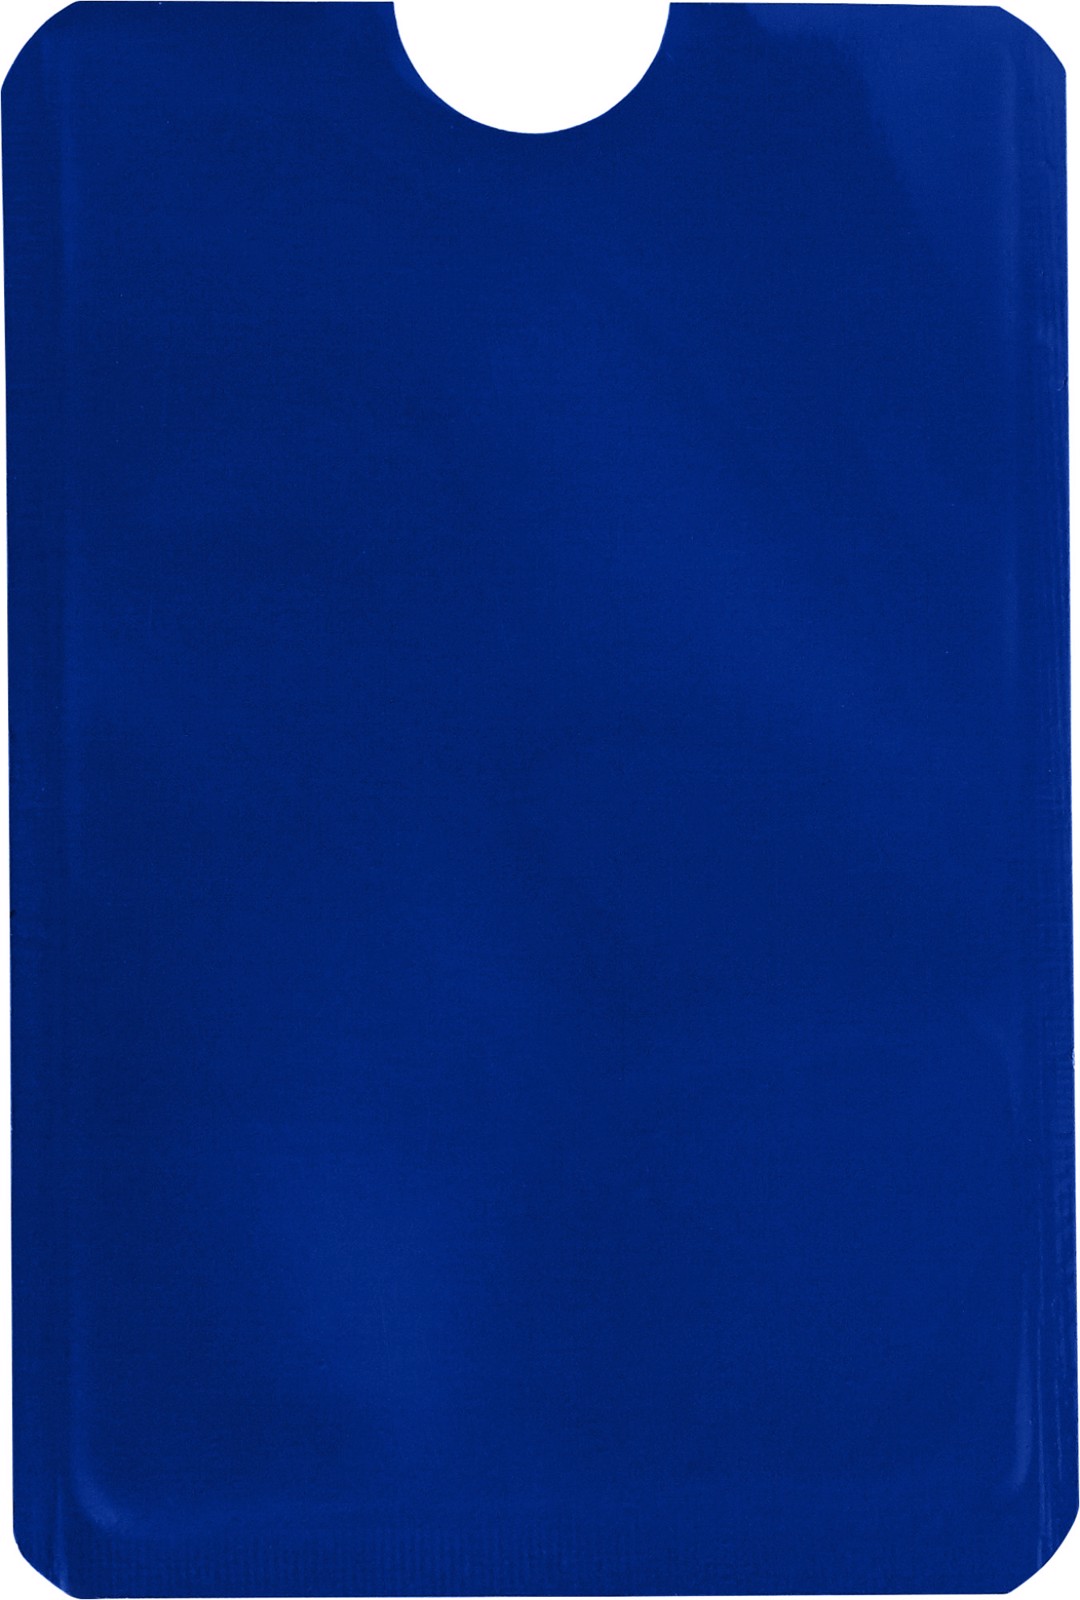 Aluminium card holder - Blue